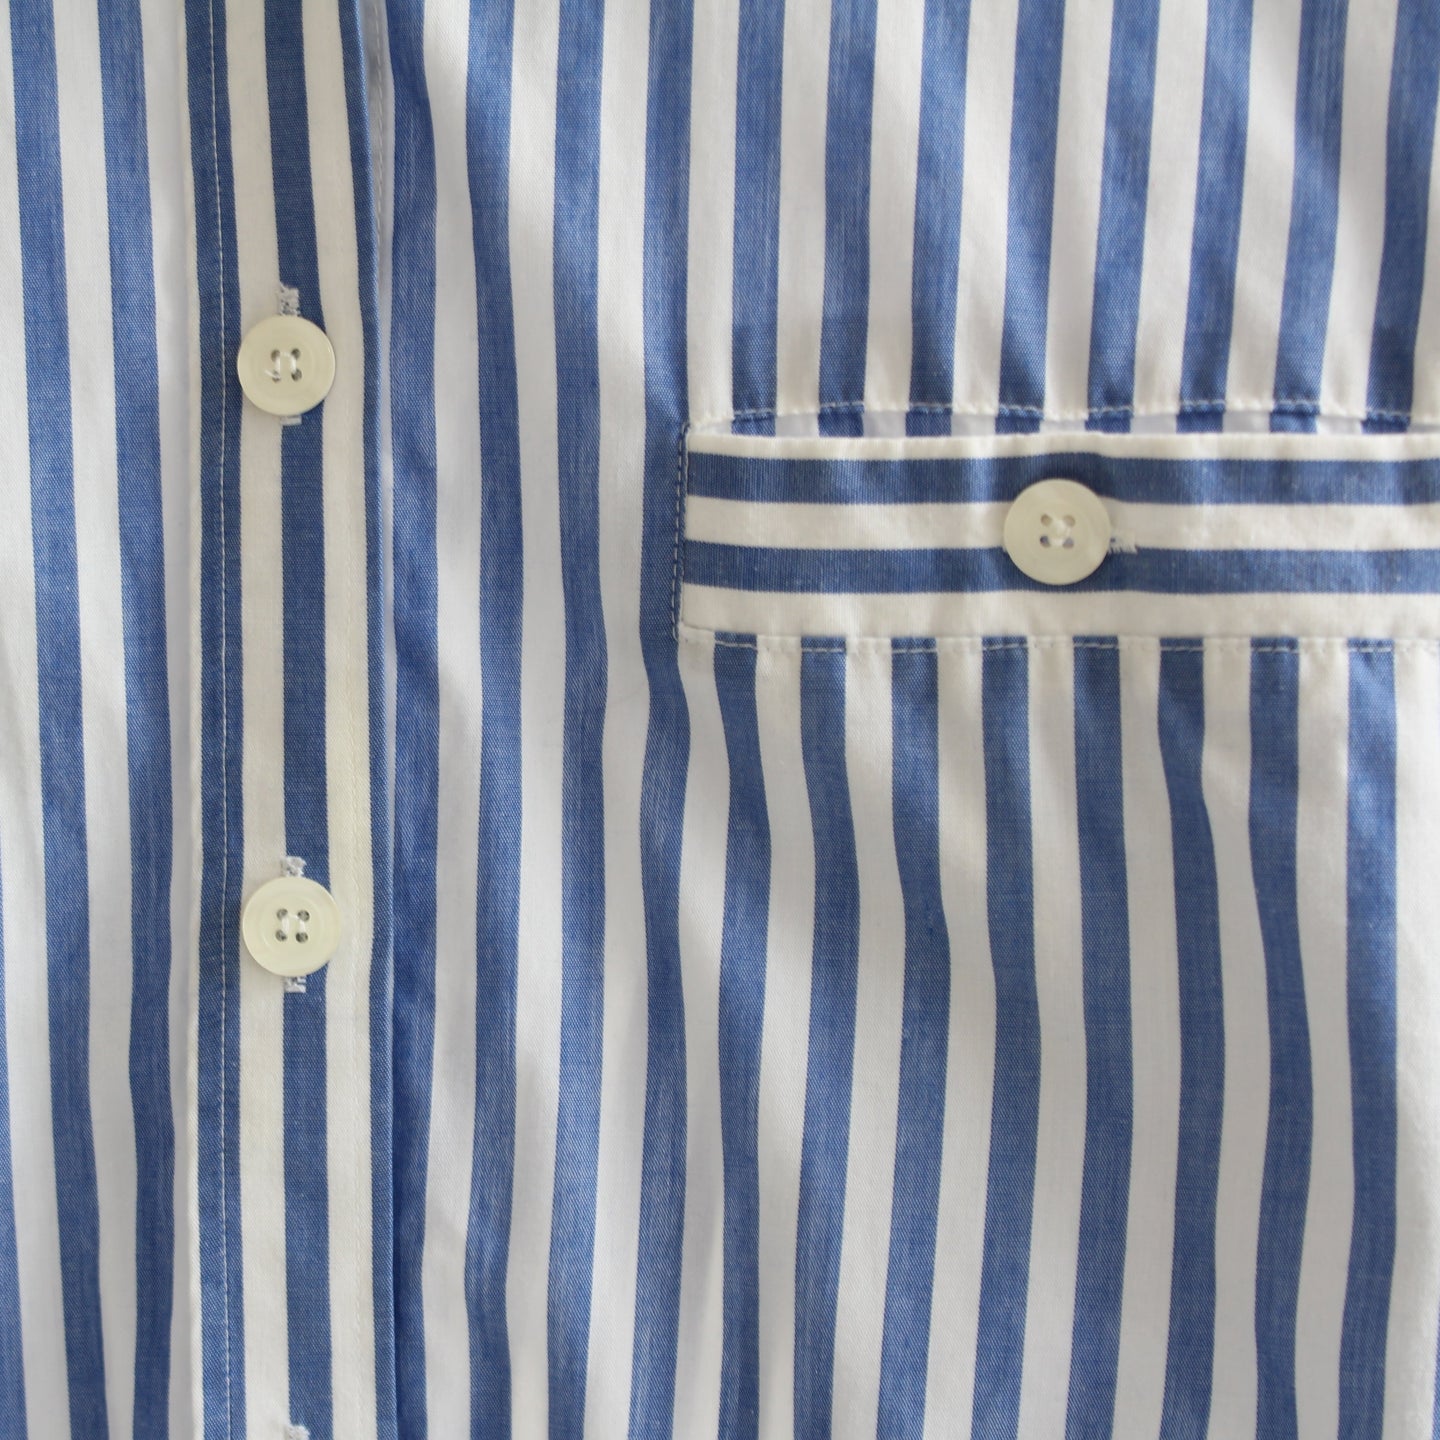 Vintage striped cotton shirt, size M/L